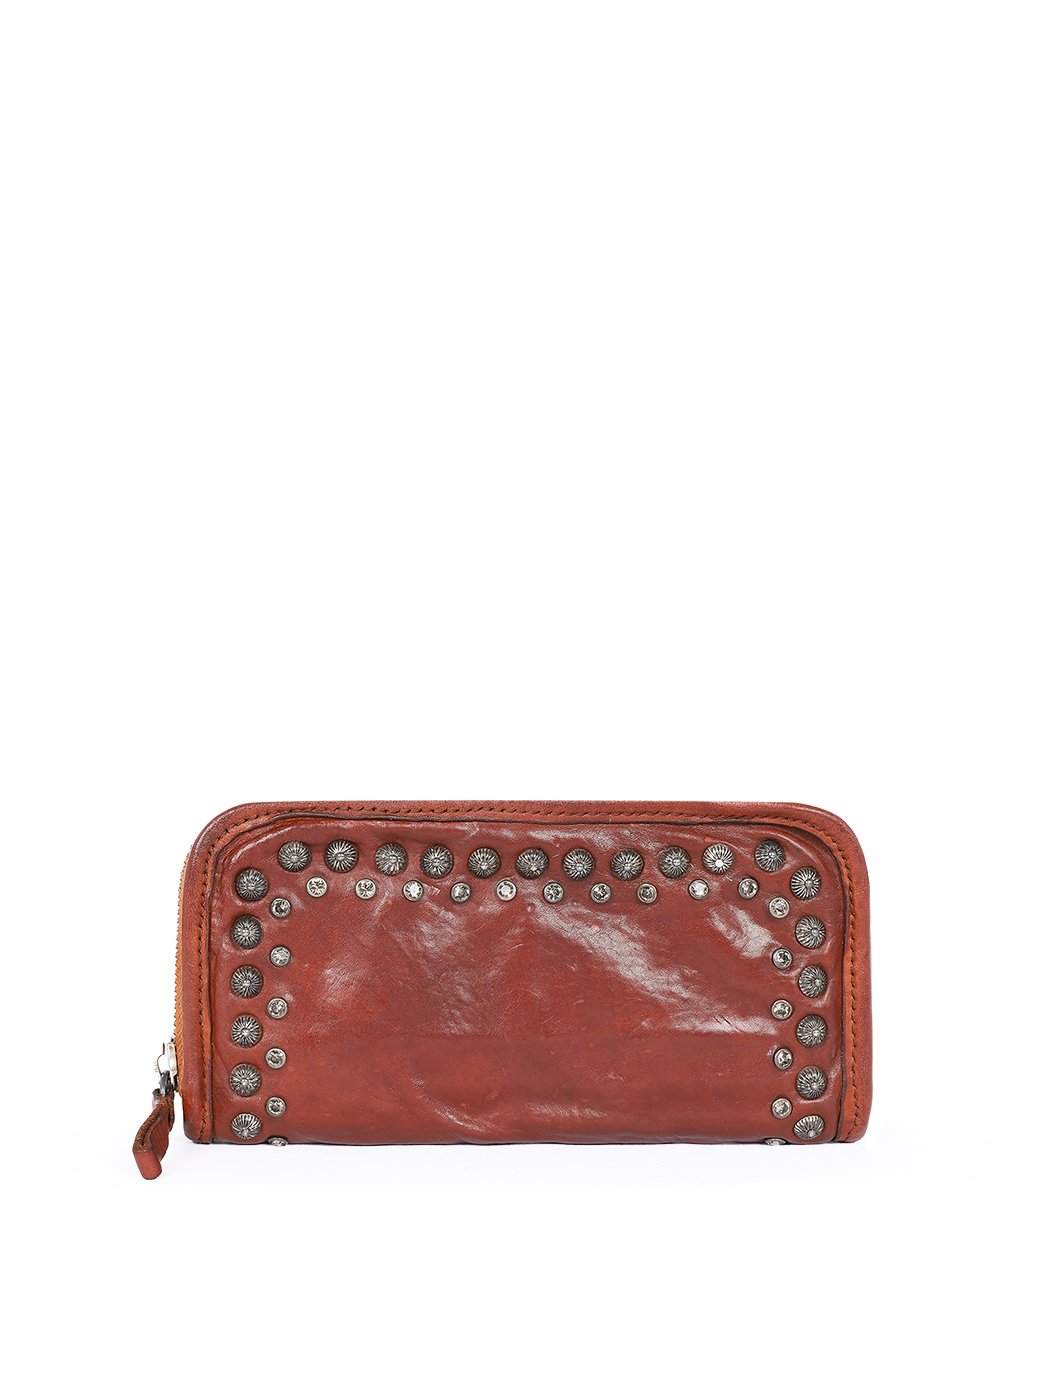 Women's Wallet with Studwork Detailing in Leather Cognac